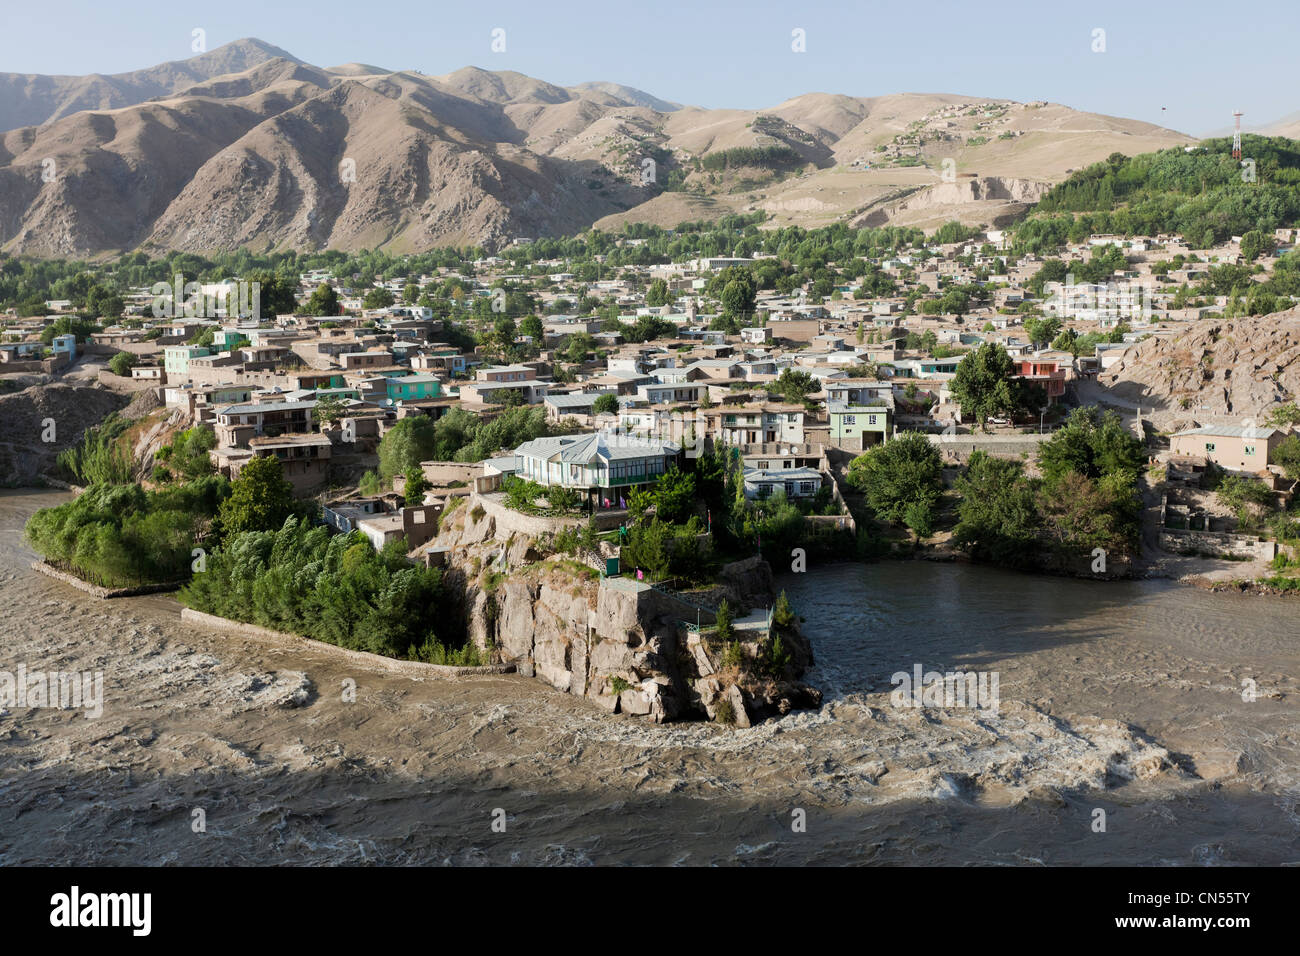 Afghanistan, Badakhshan province, Faizabad, Faizabad town seen from the road across Kokcha River Stock Photo